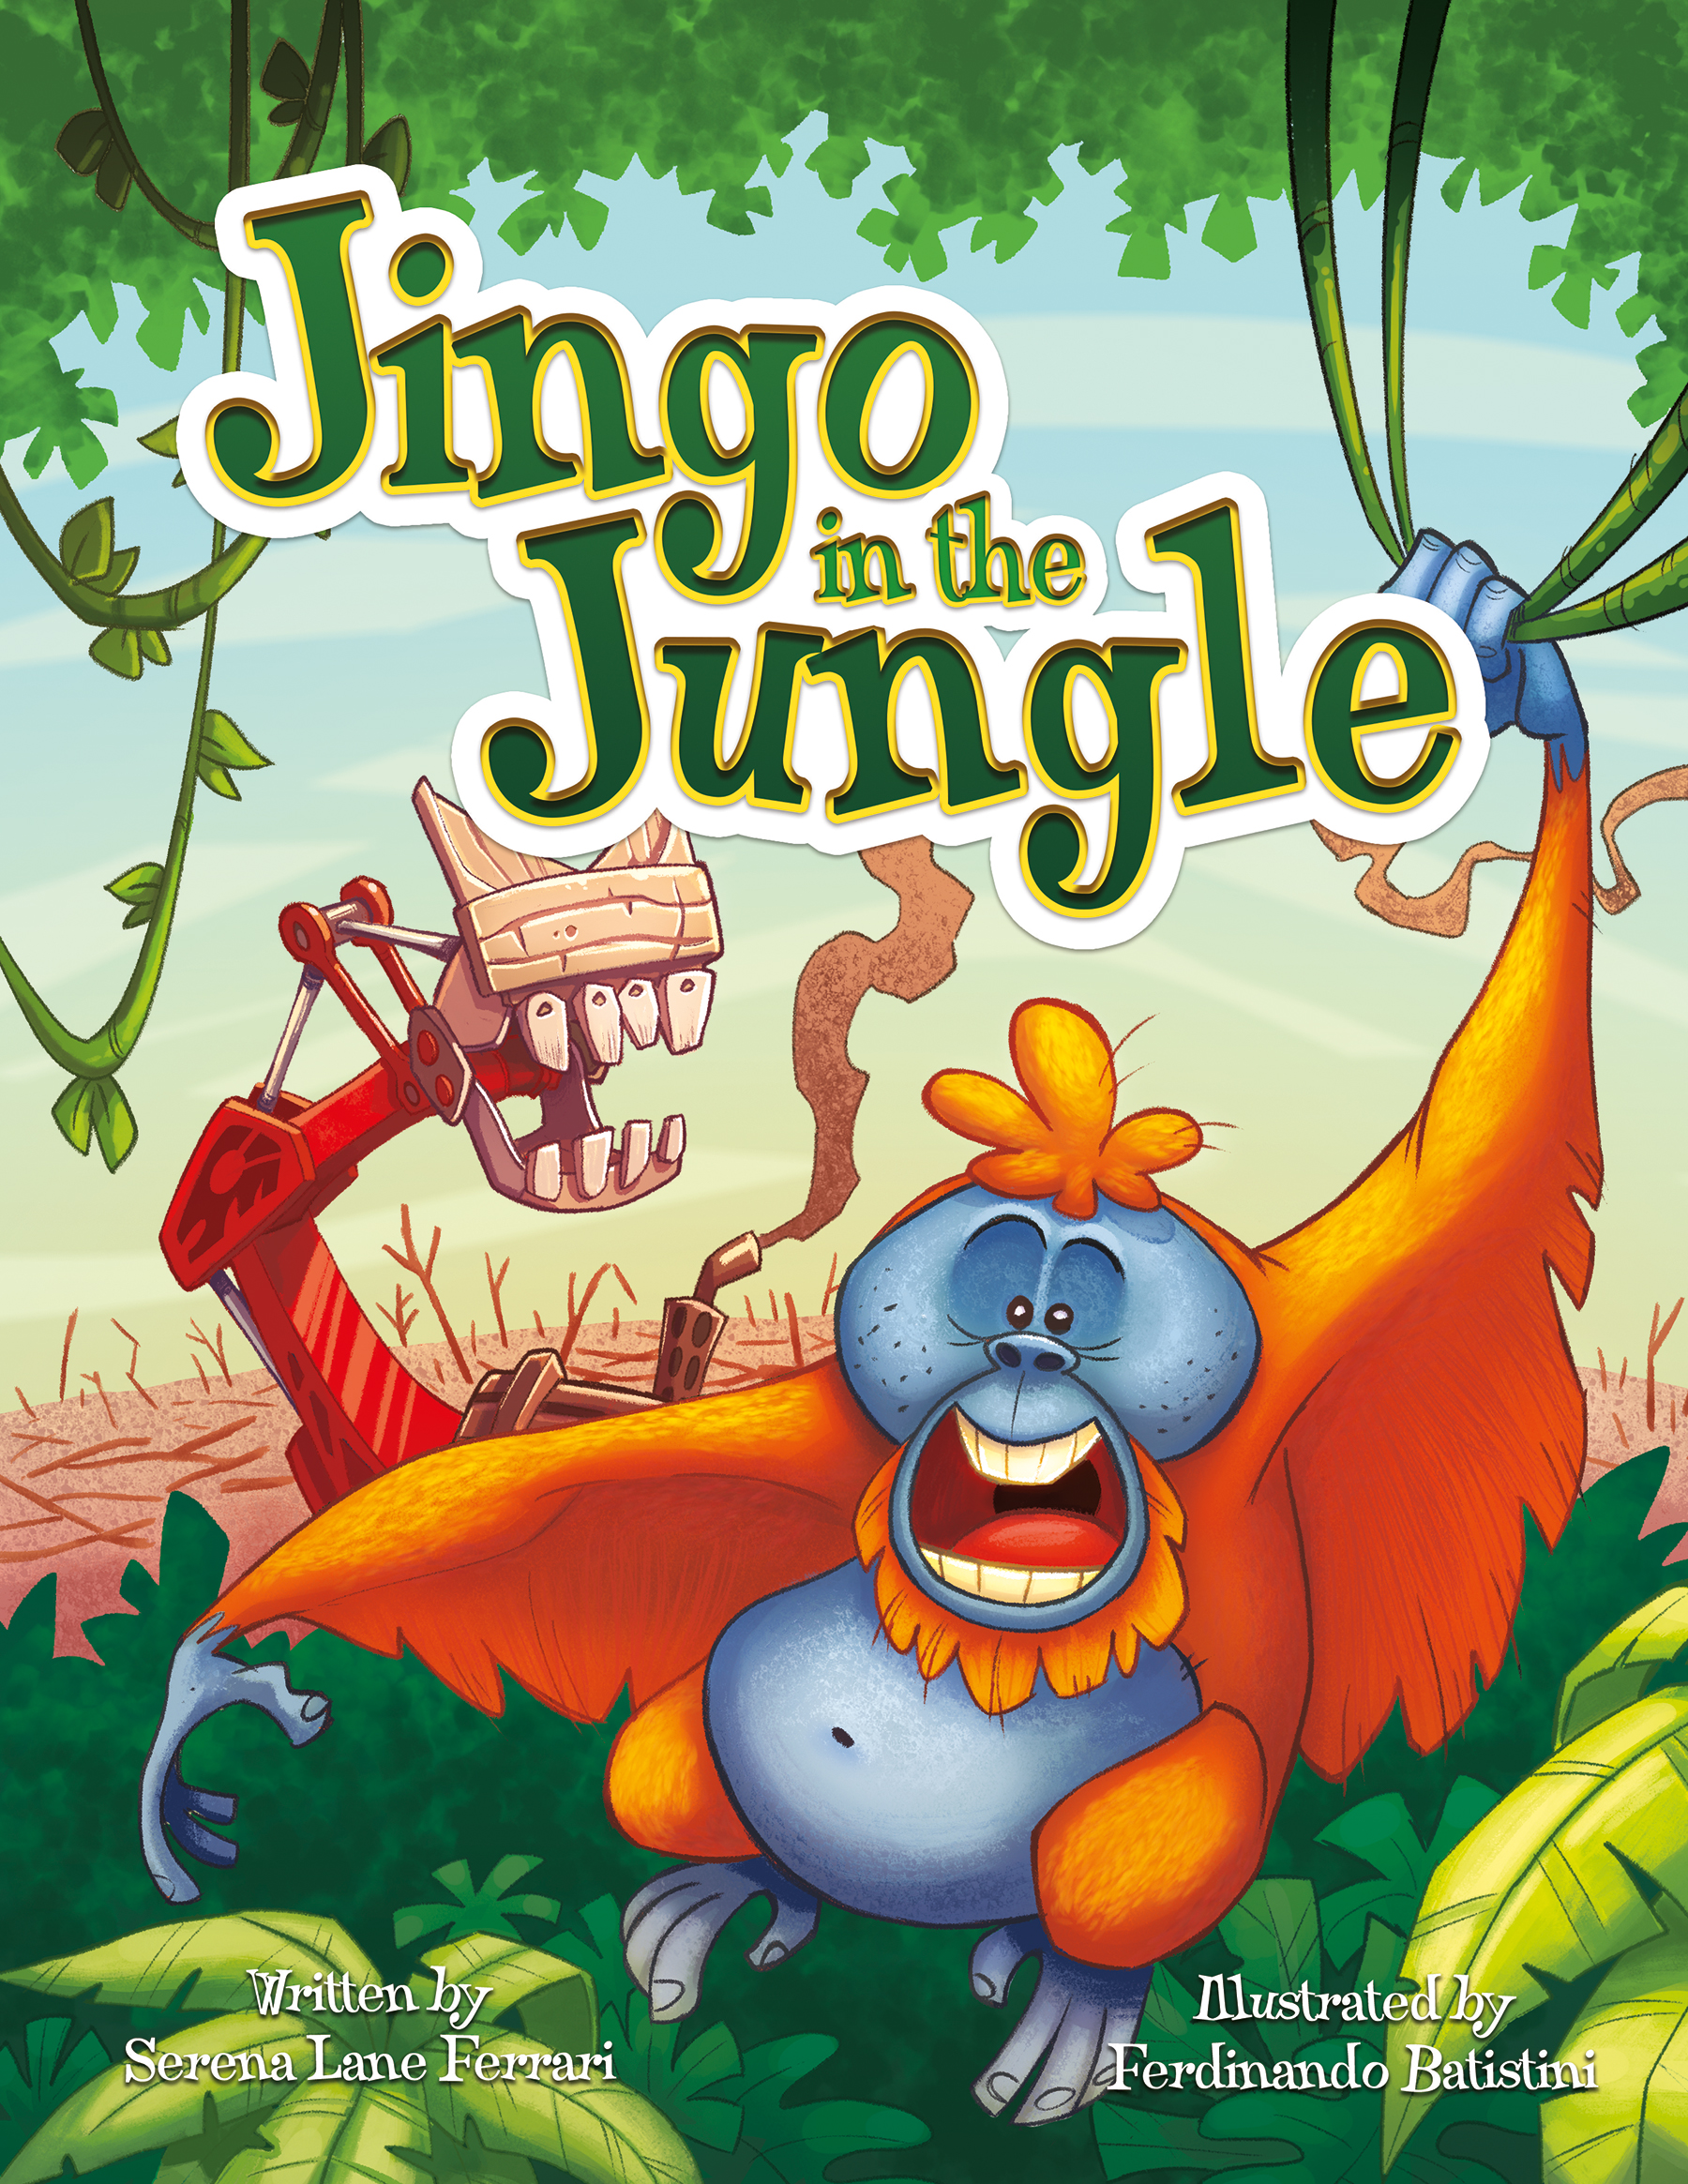 FREE: Jingo in the Jungle: Saving the Jewels of the Earth by Serena Lane Ferrari